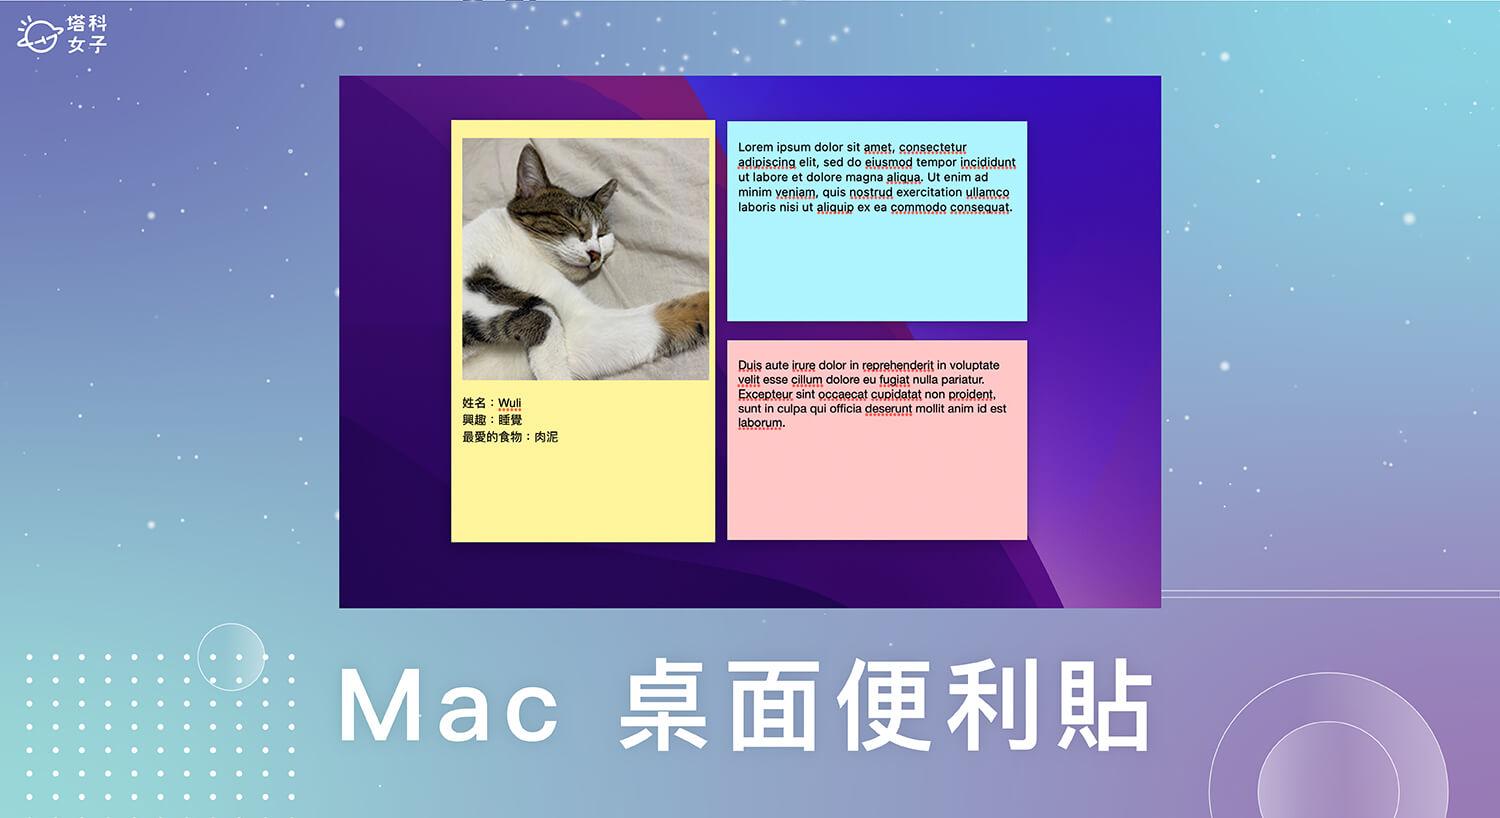 Mac 便條紙 App 在 macOS 桌面顯示便利貼、待辦事項筆記